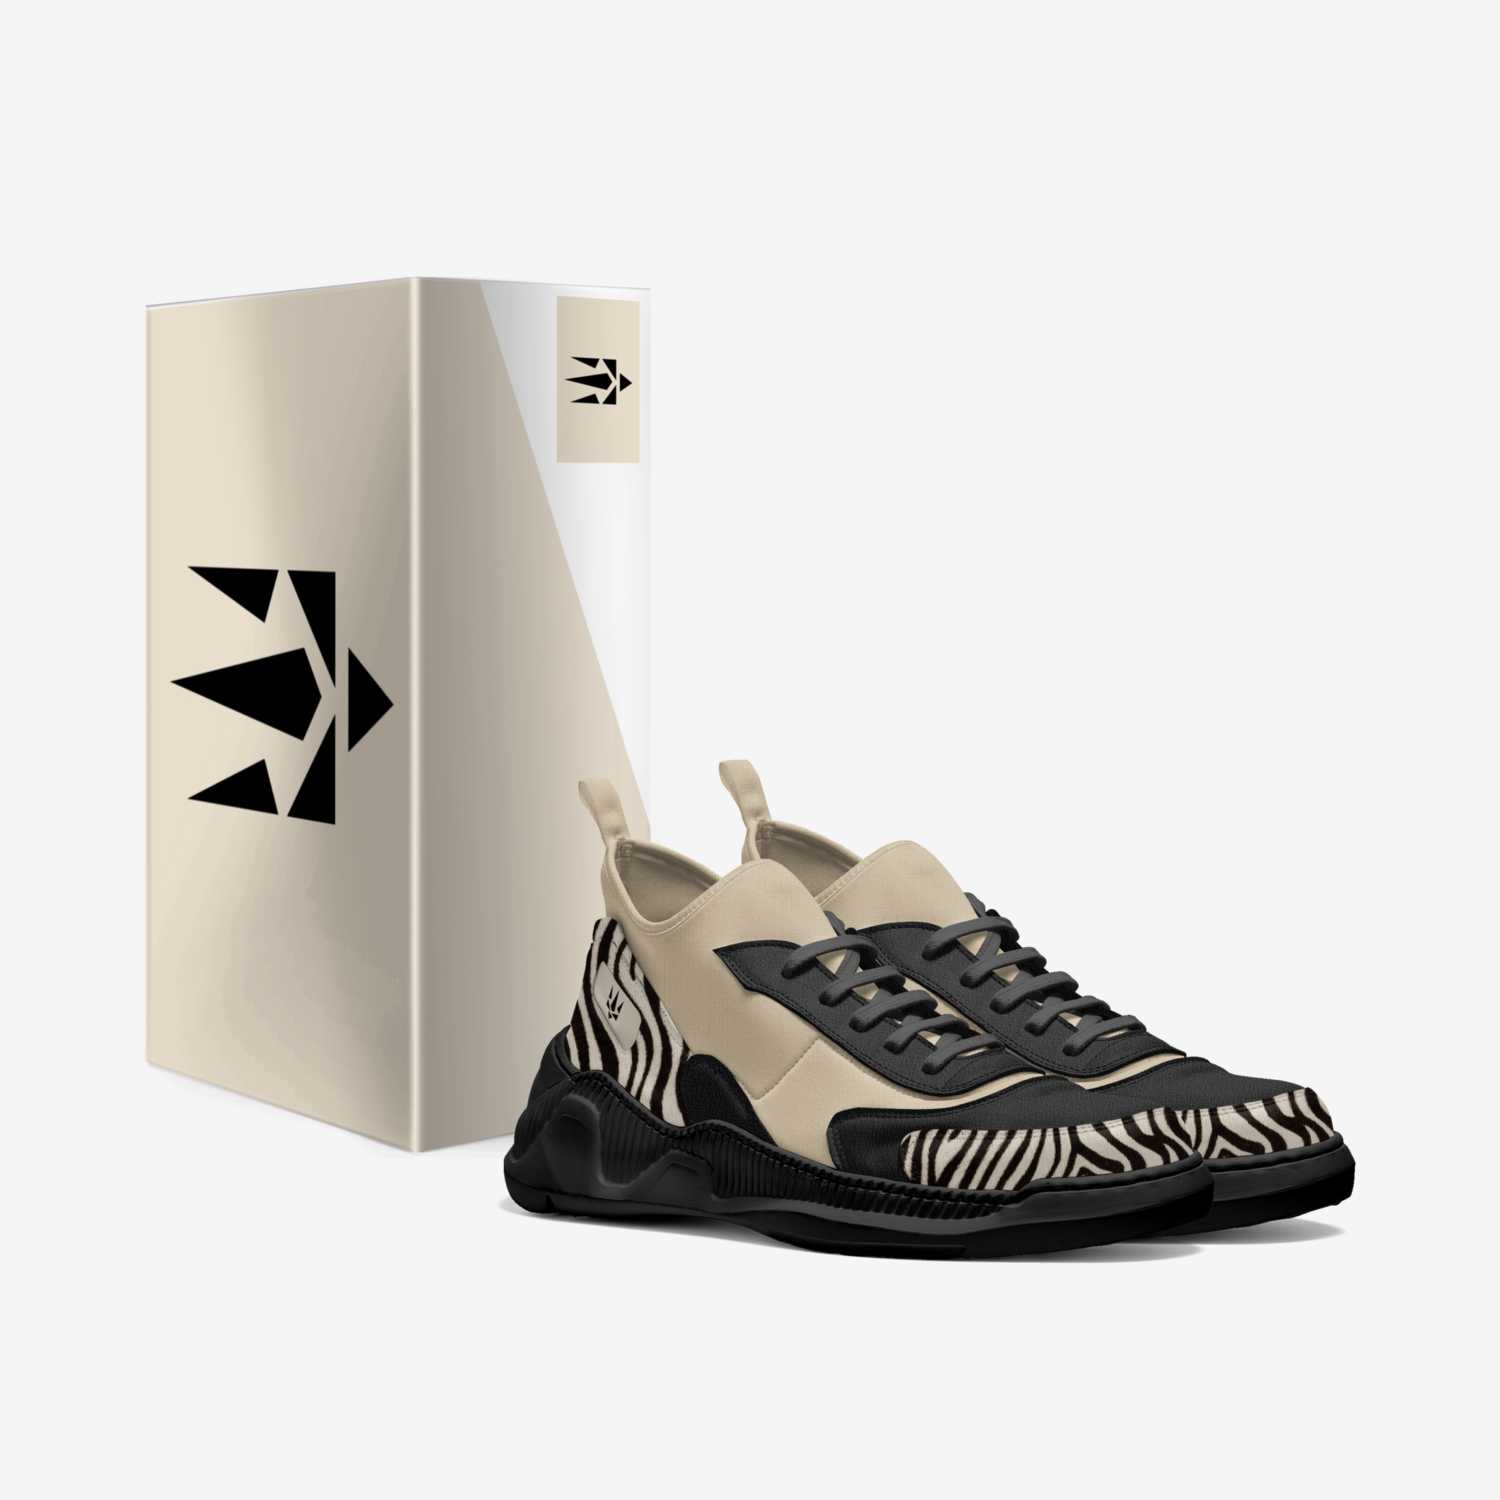 Olympian II  custom made in Italy shoes by Ryan G. Rgp Enterprises, Llc | Box view